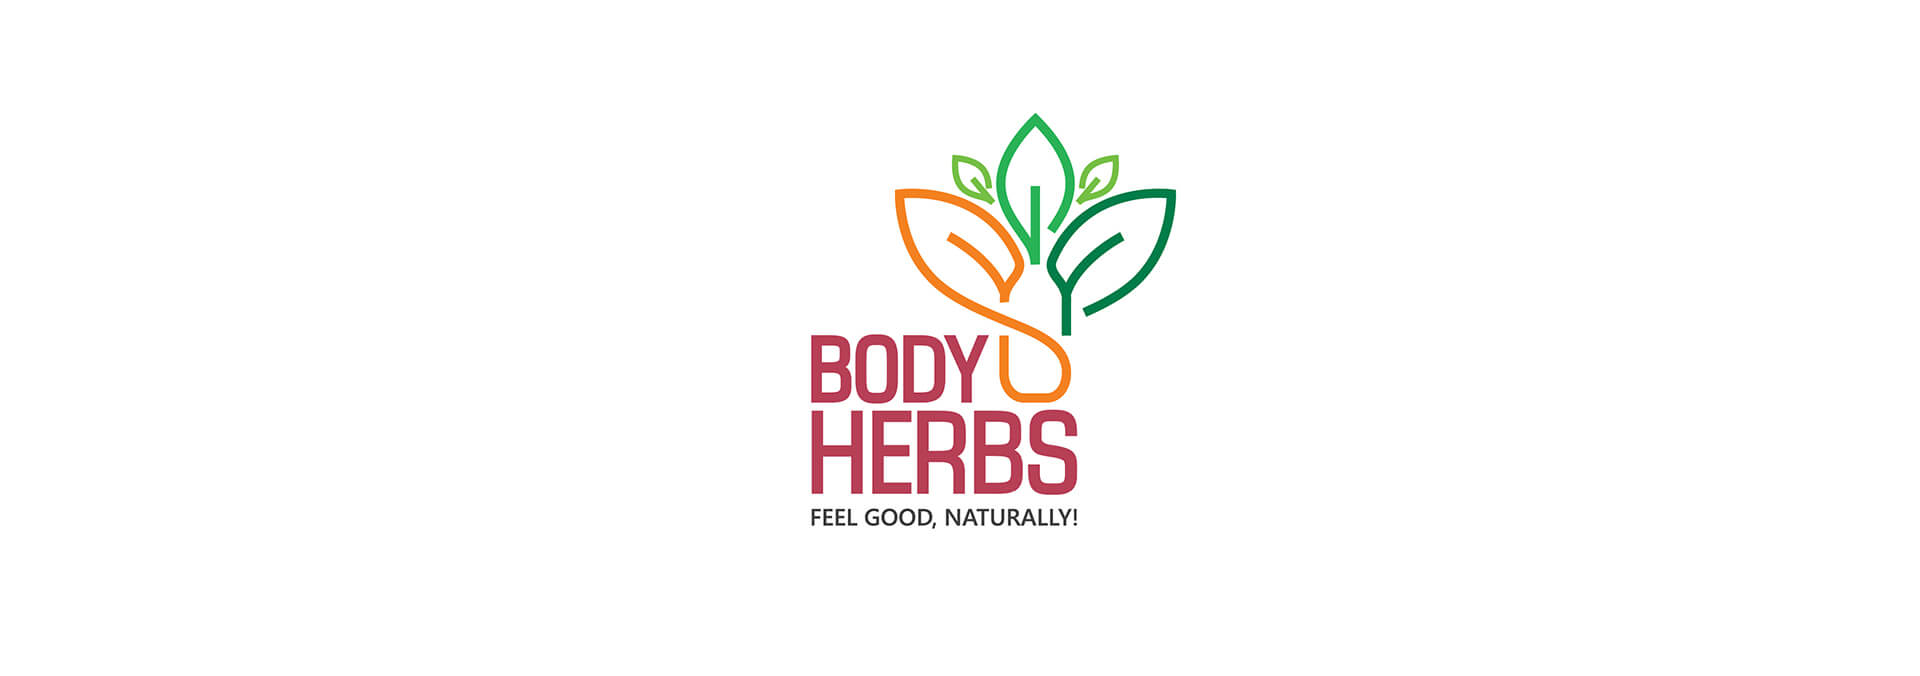 Body Herbs banner